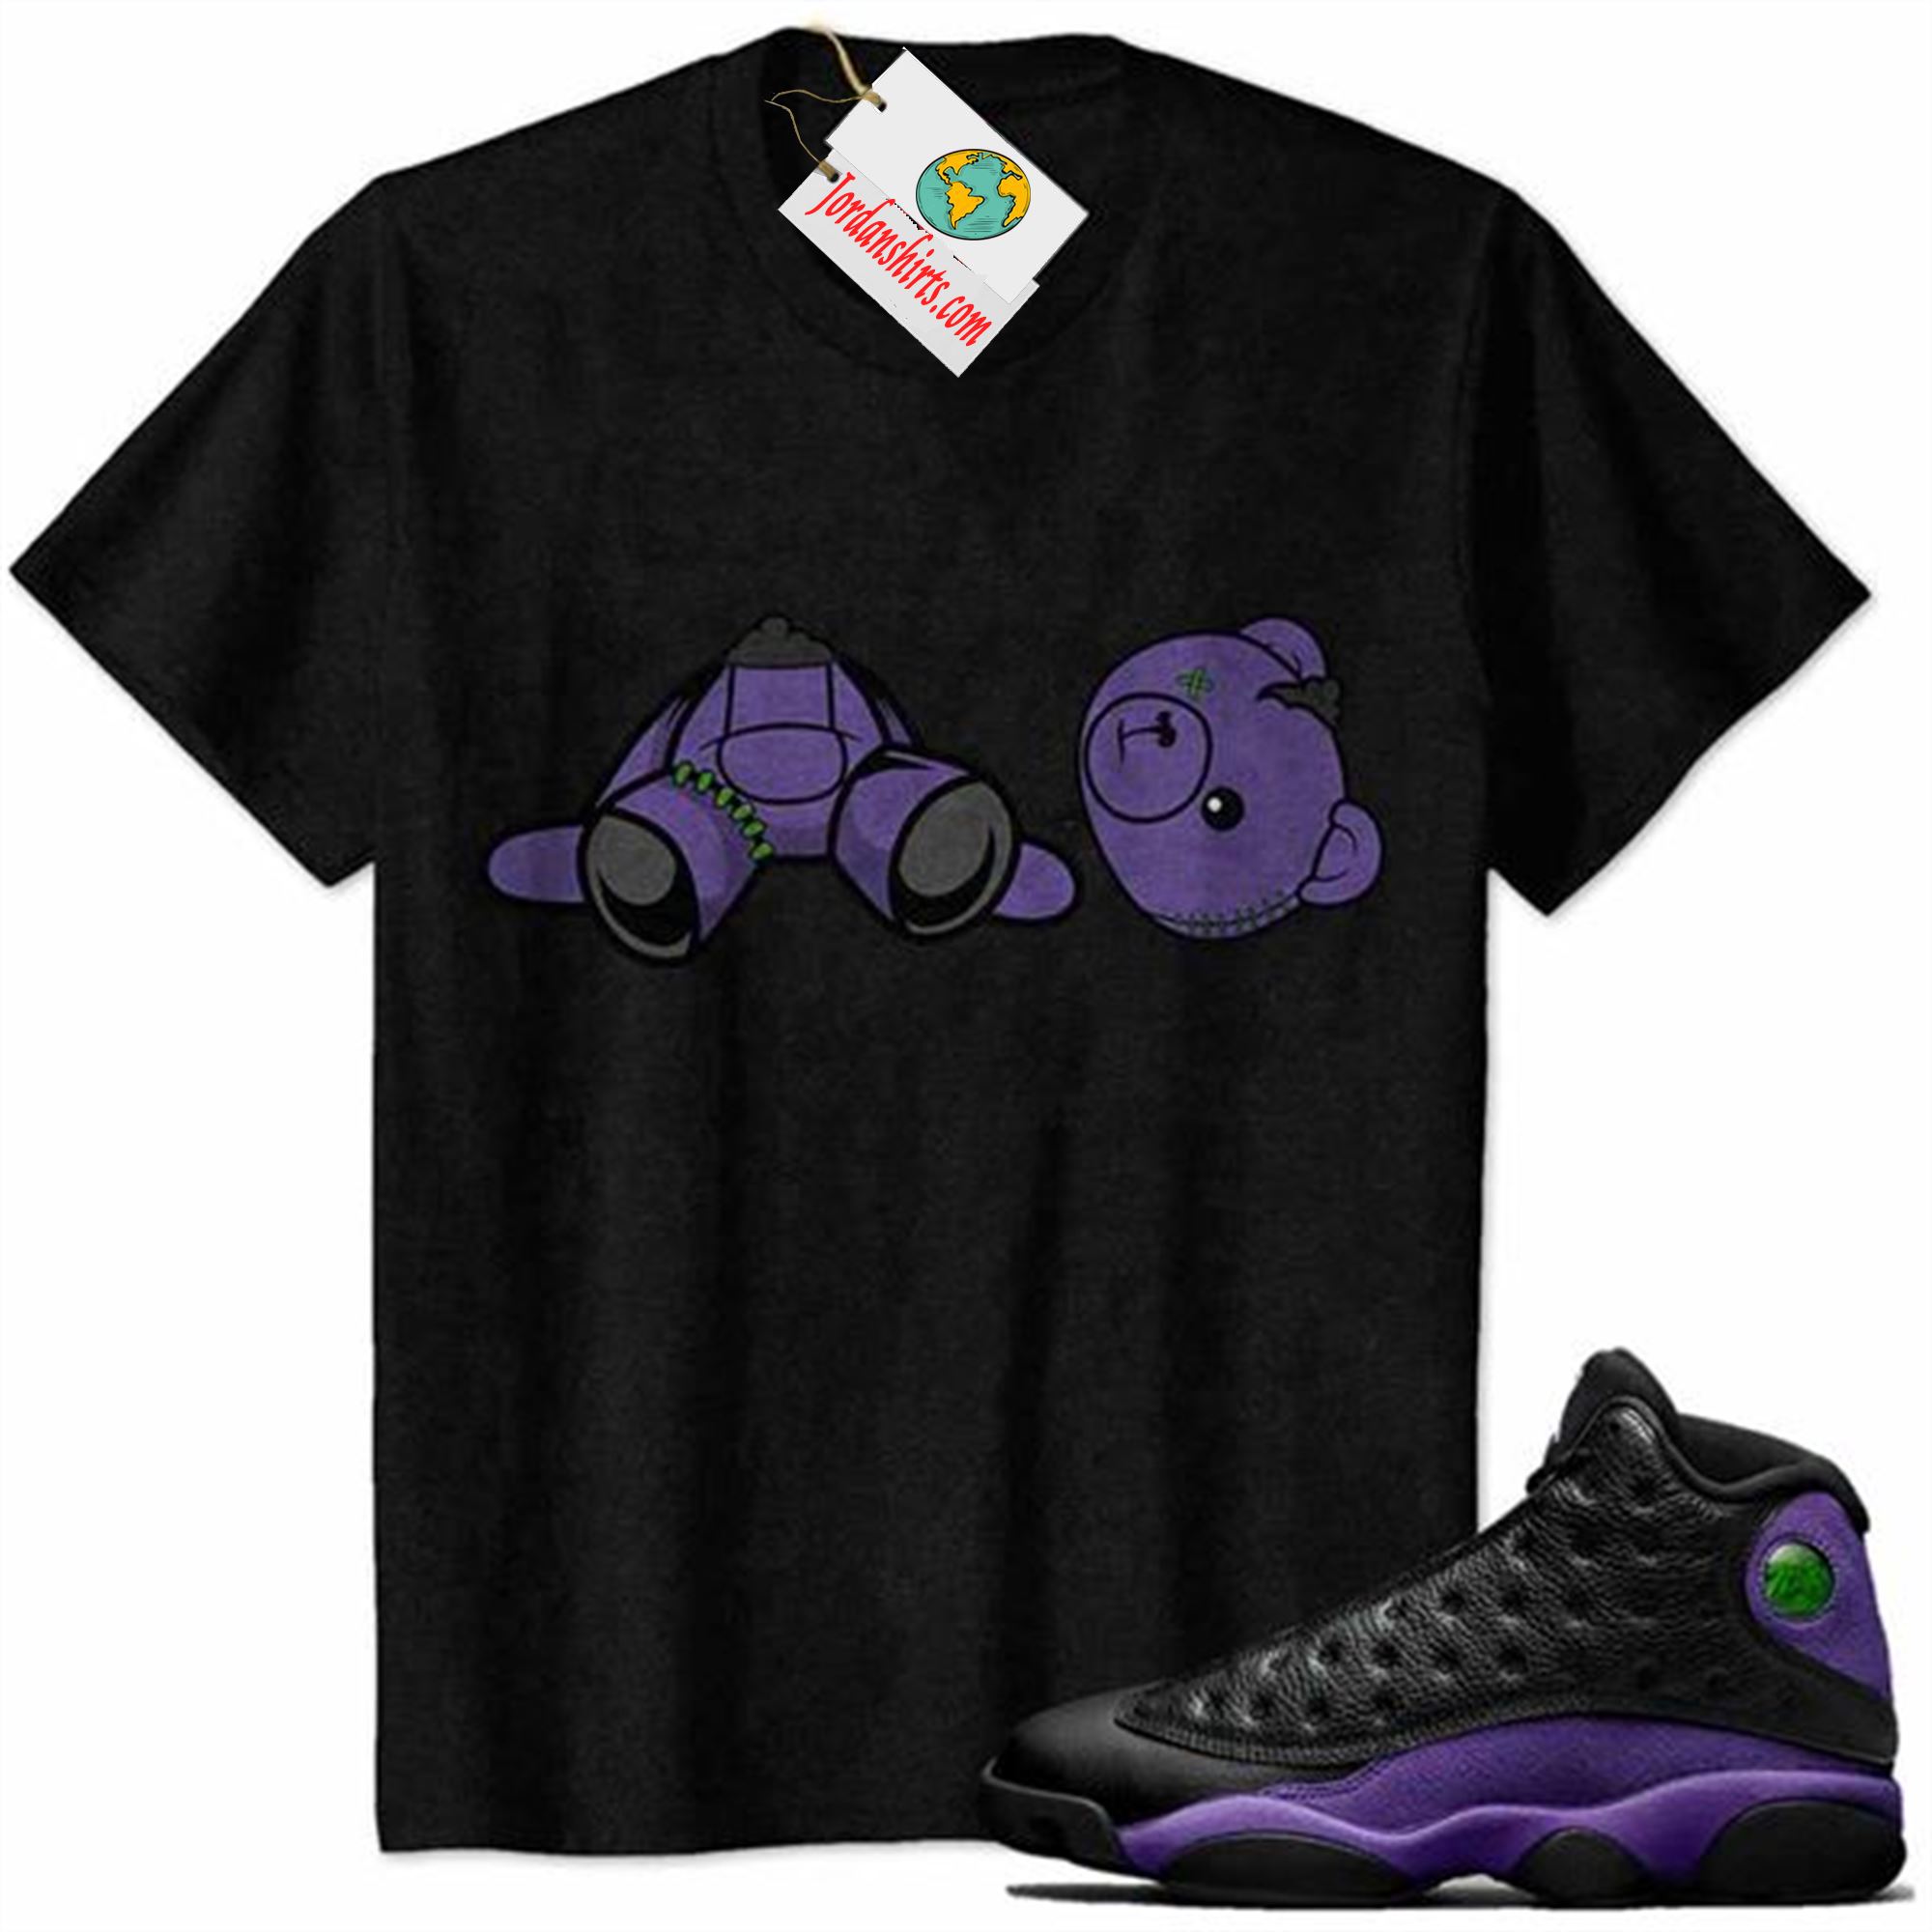 Jordan 13 Shirt, Teddy Angel Black Air Jordan 13 Court Purple 13s Size Up To 5xl